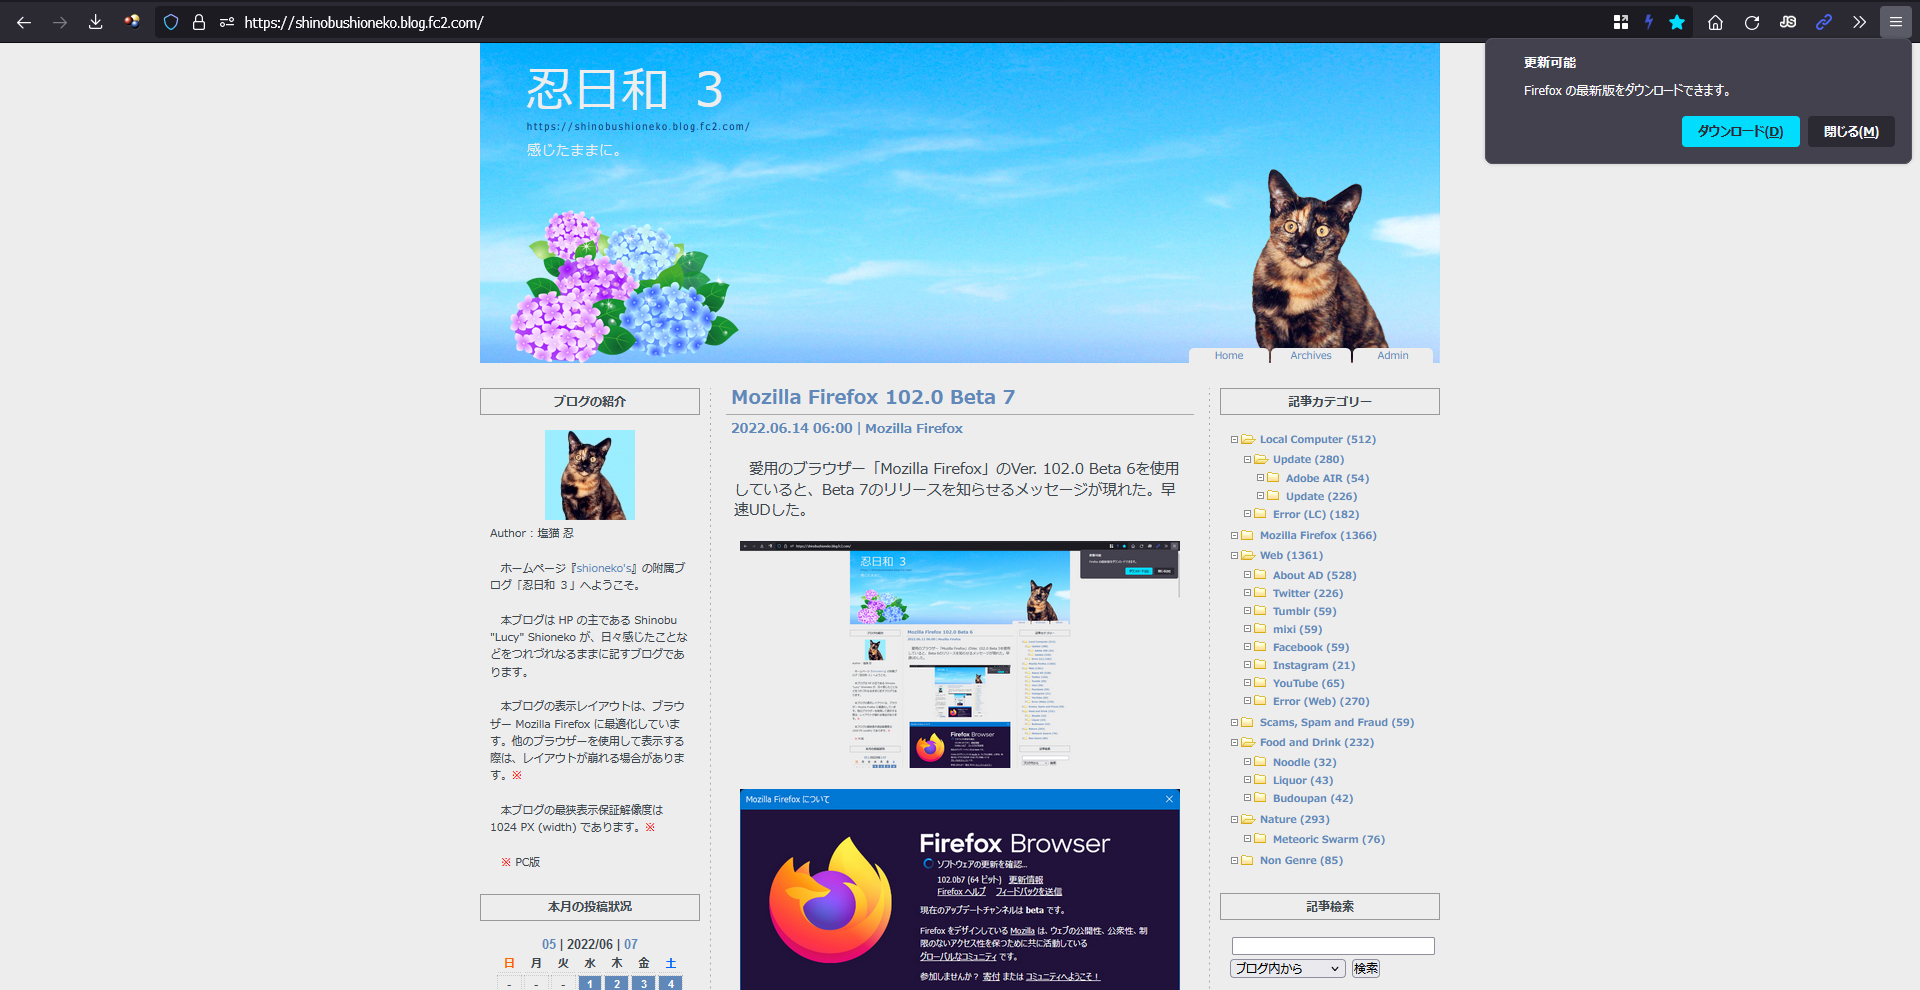 Mozilla Firefox 102.0 Beta 8